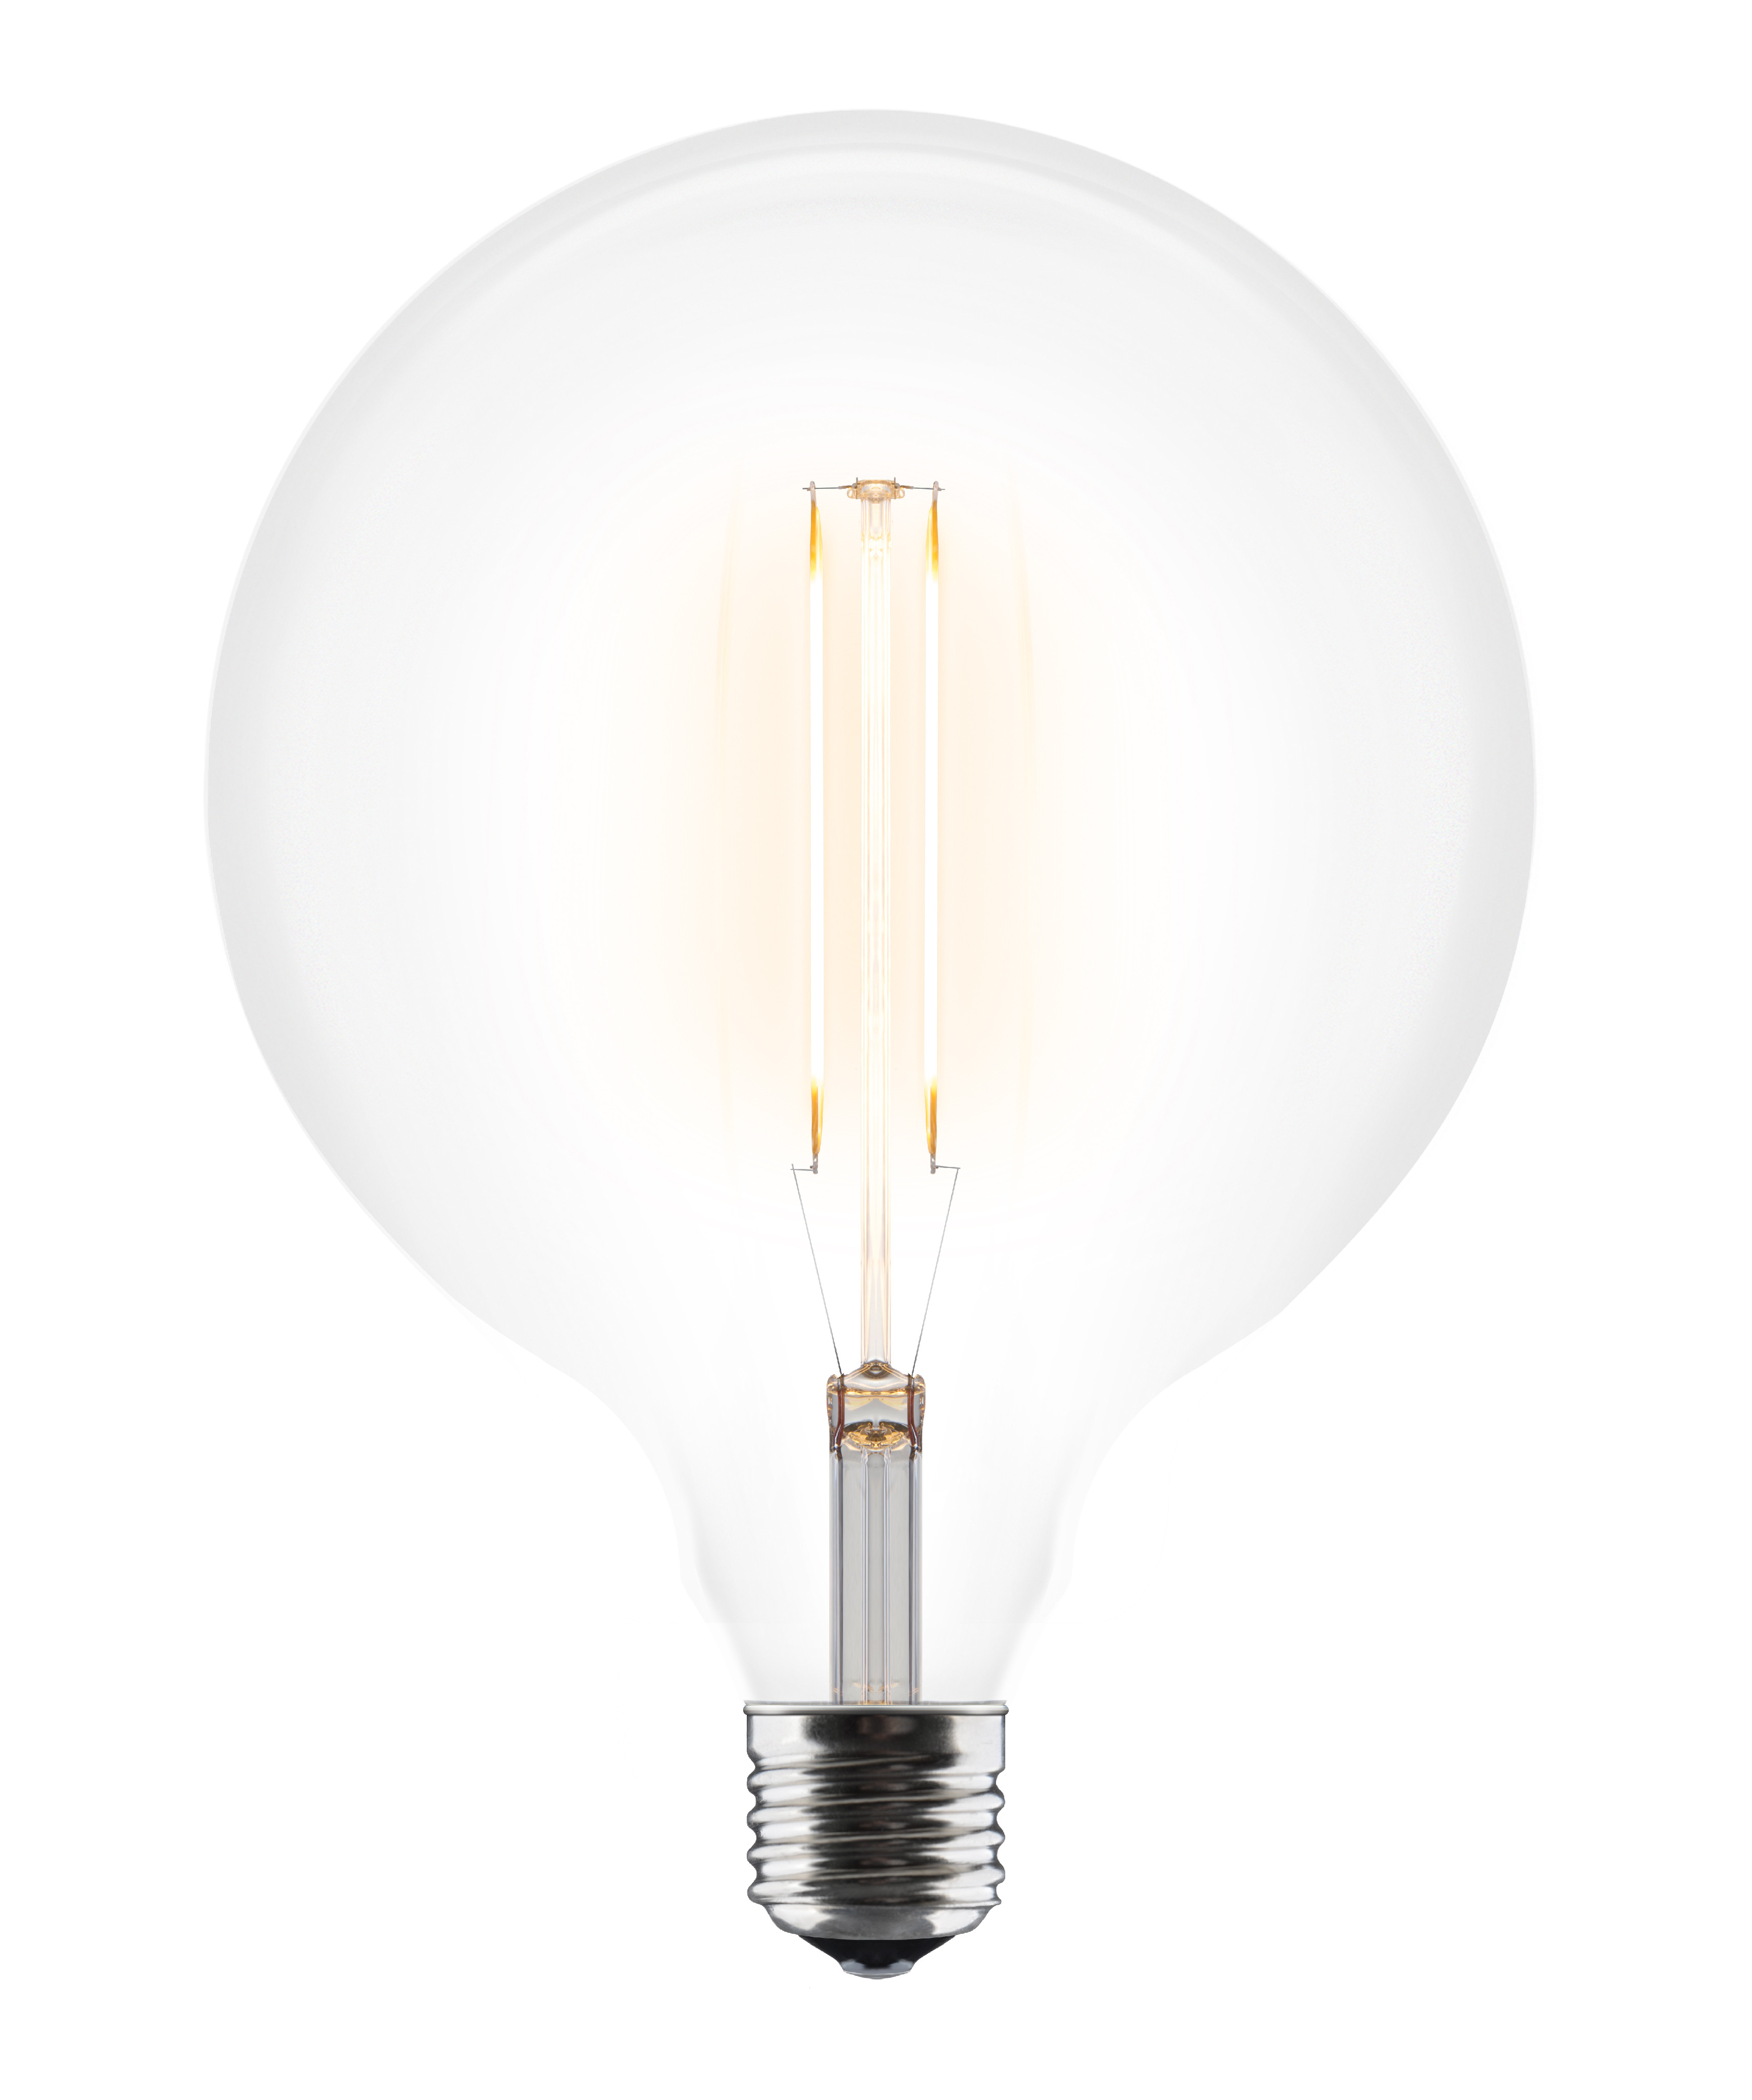 Žiarovka Idea LED A+ 125 mm / 3W - UMAGE